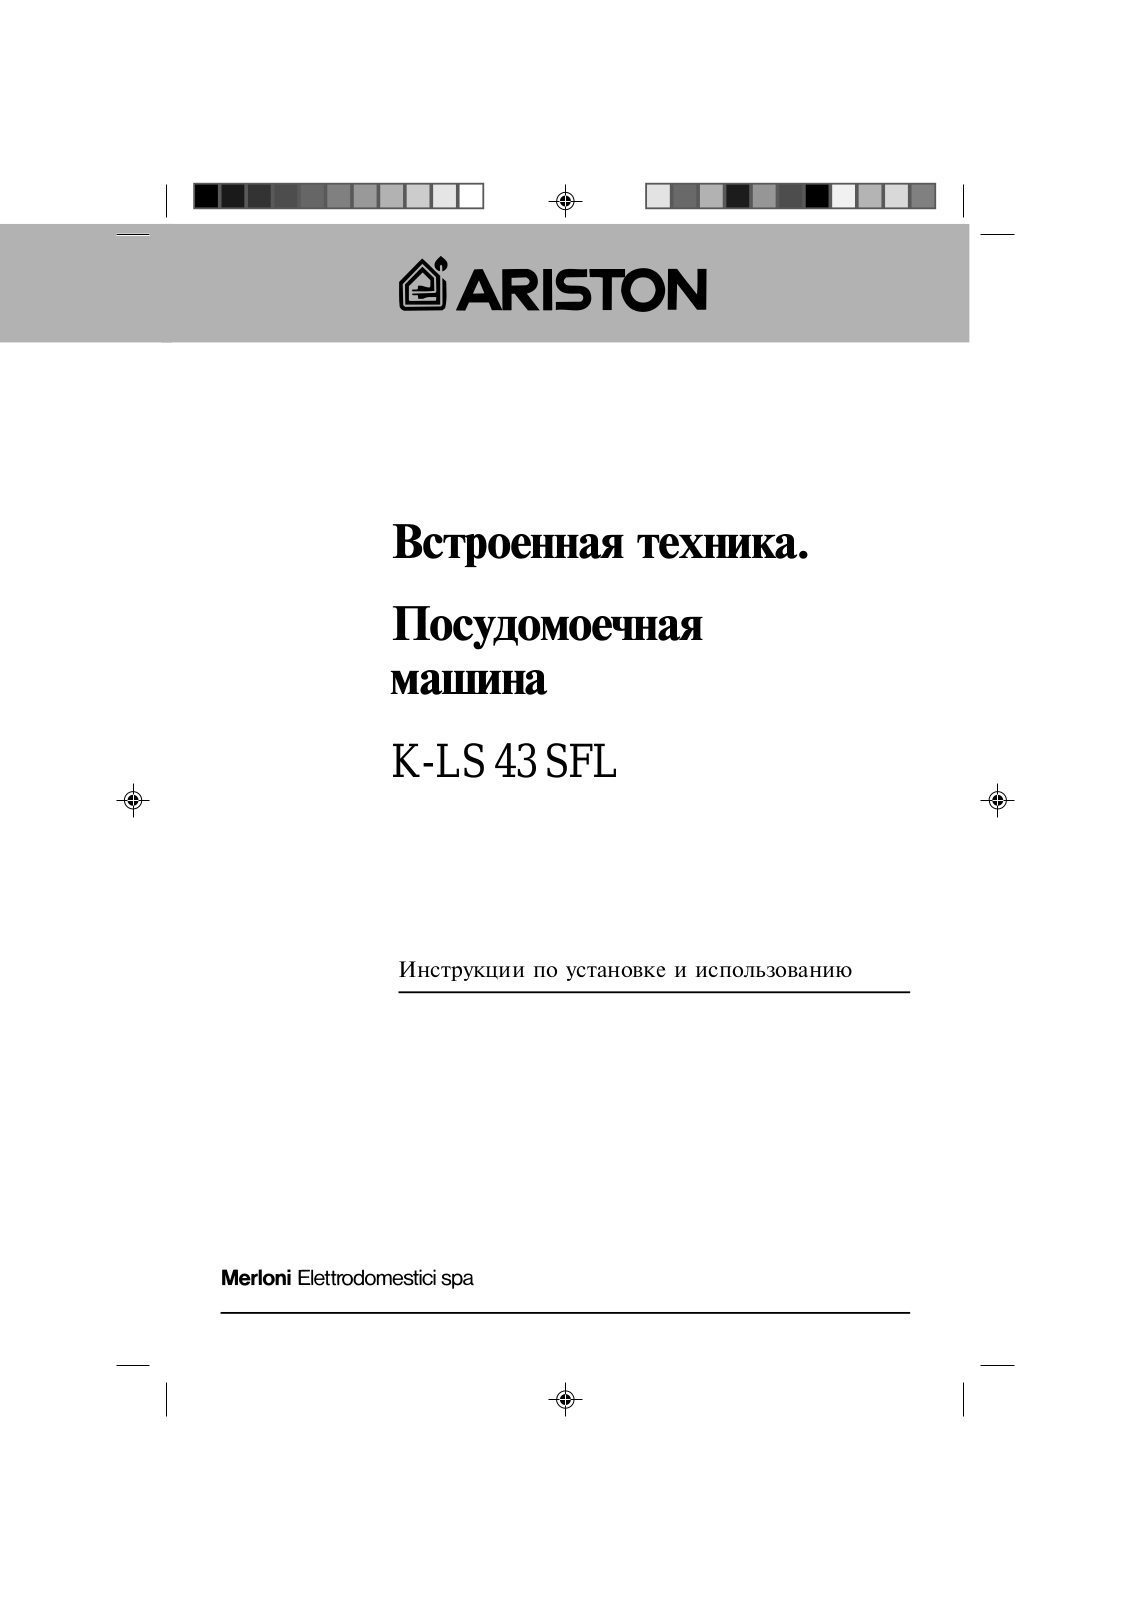 Hotpoint-ariston K-LS 43 SFL User Manual